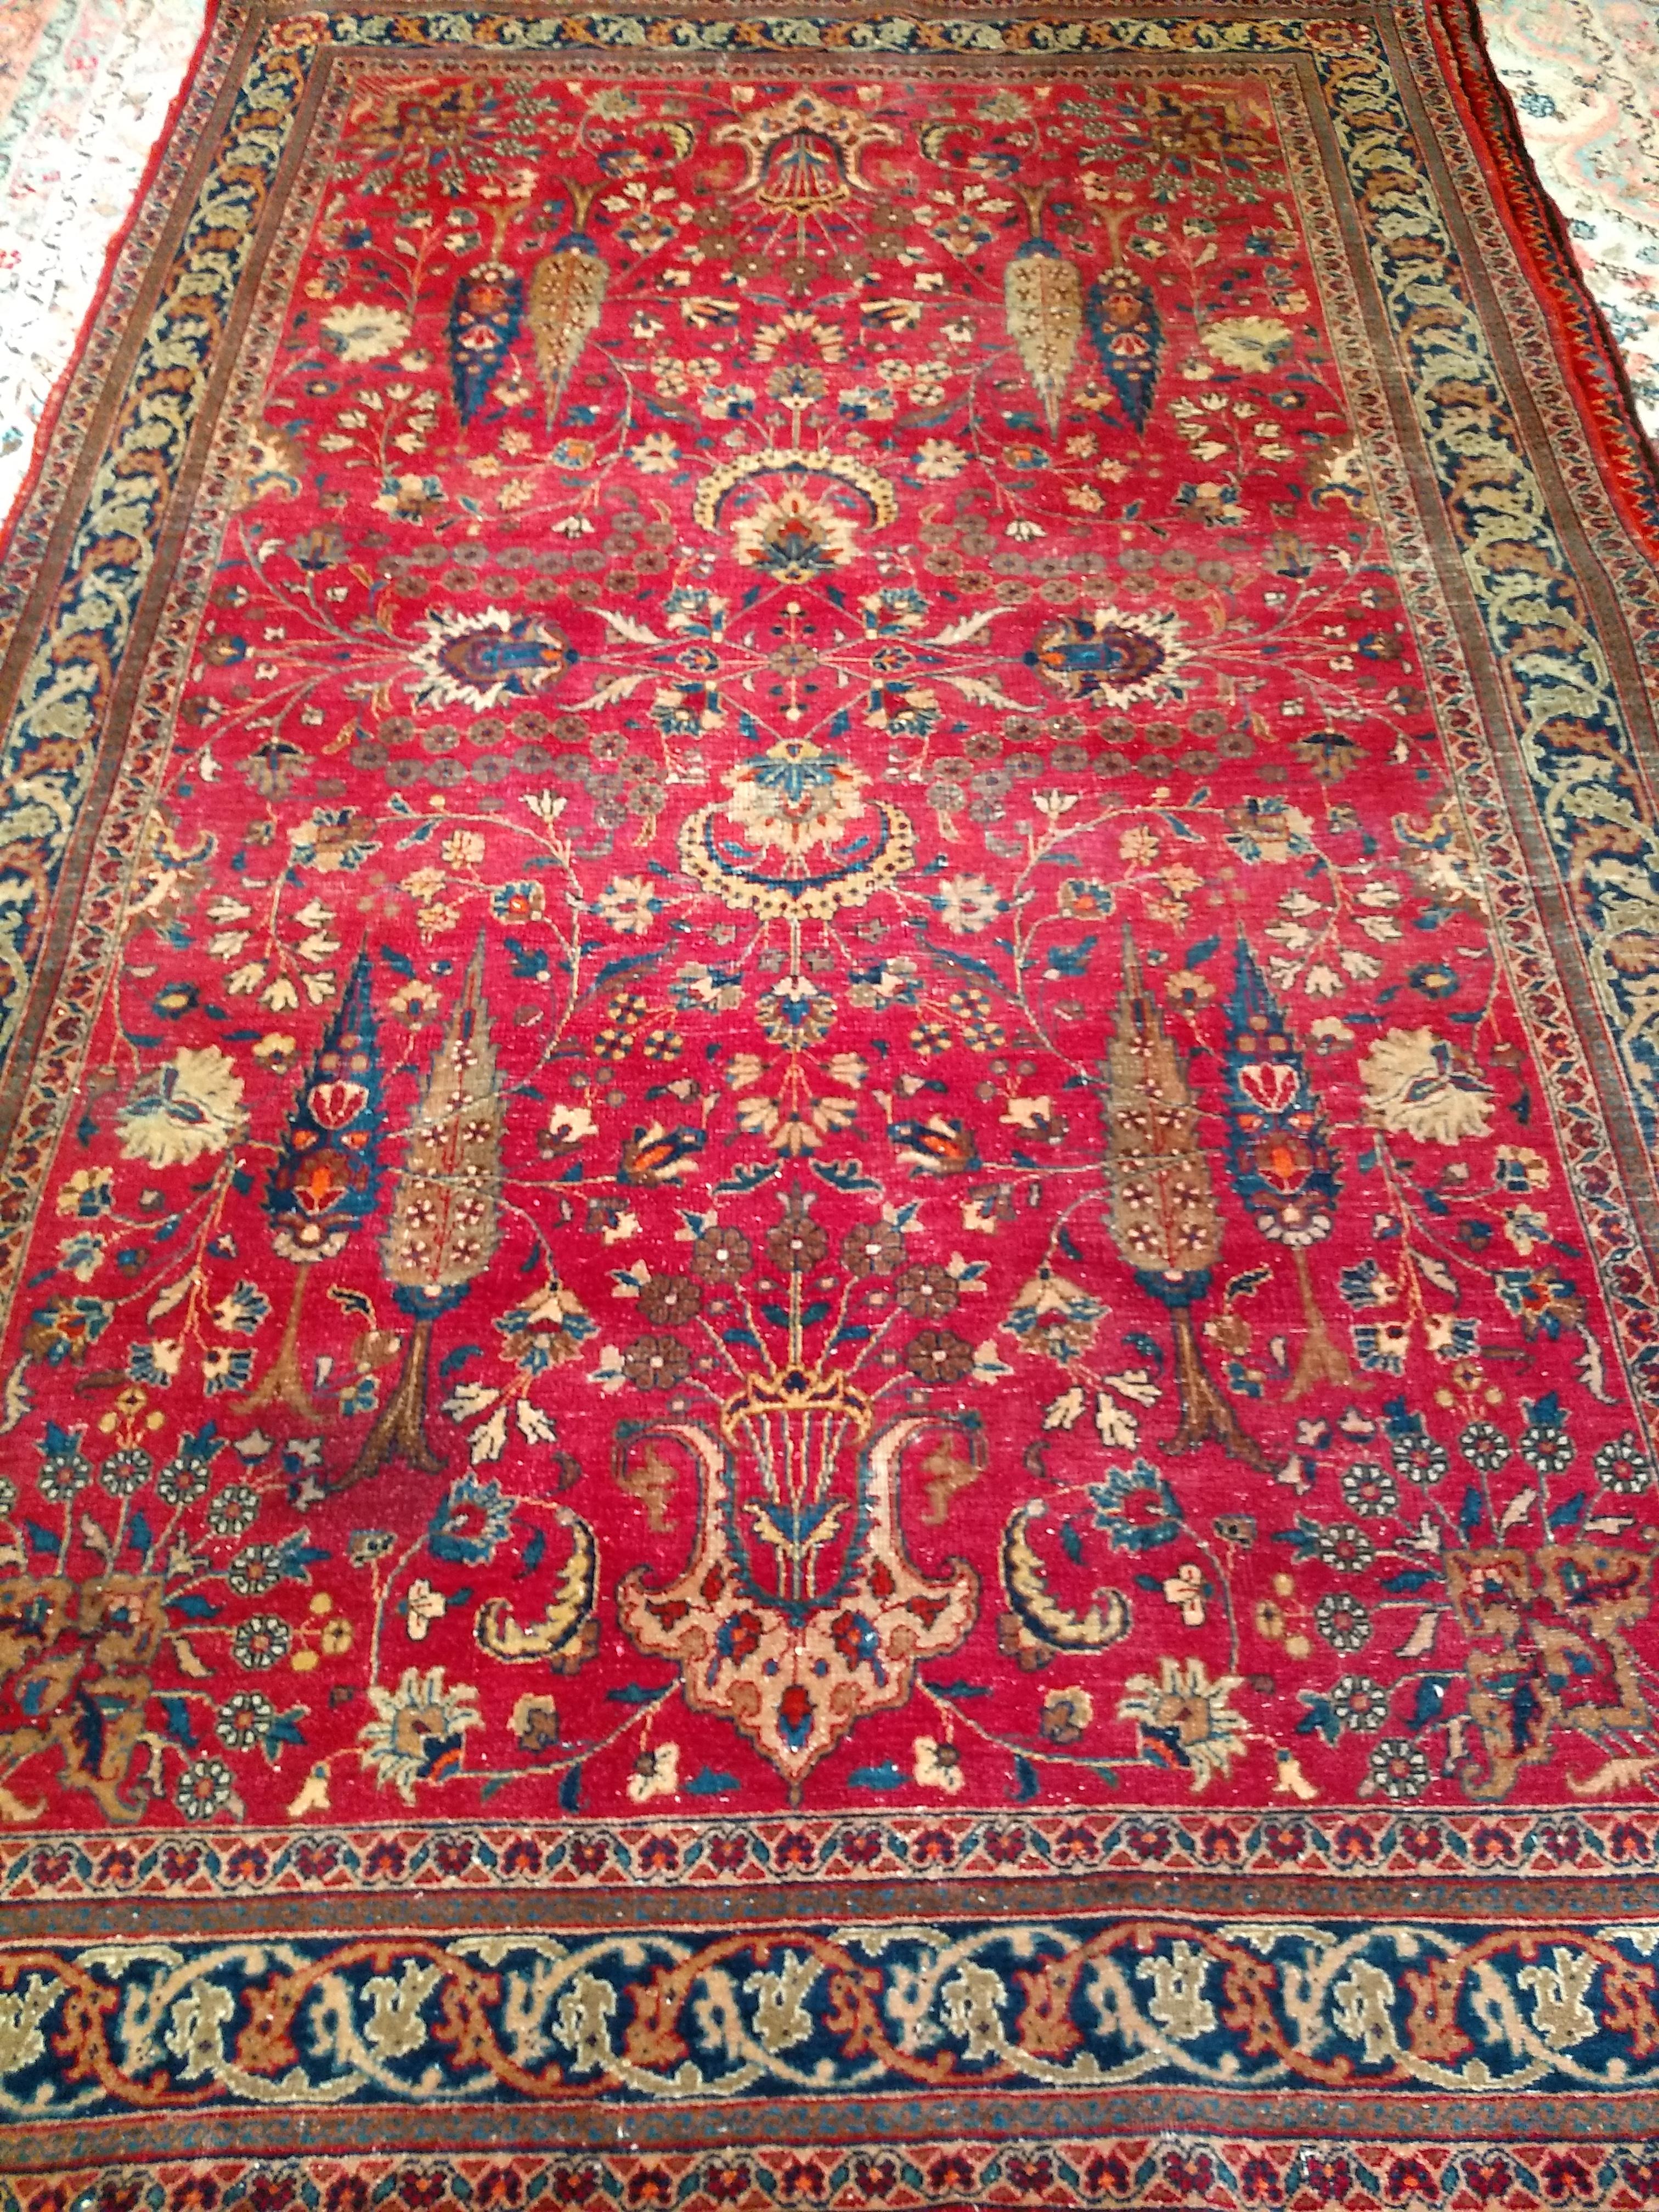 19th Century Persian Khorassan in Allover Floral Design in Crimson Red, Blue For Sale 4